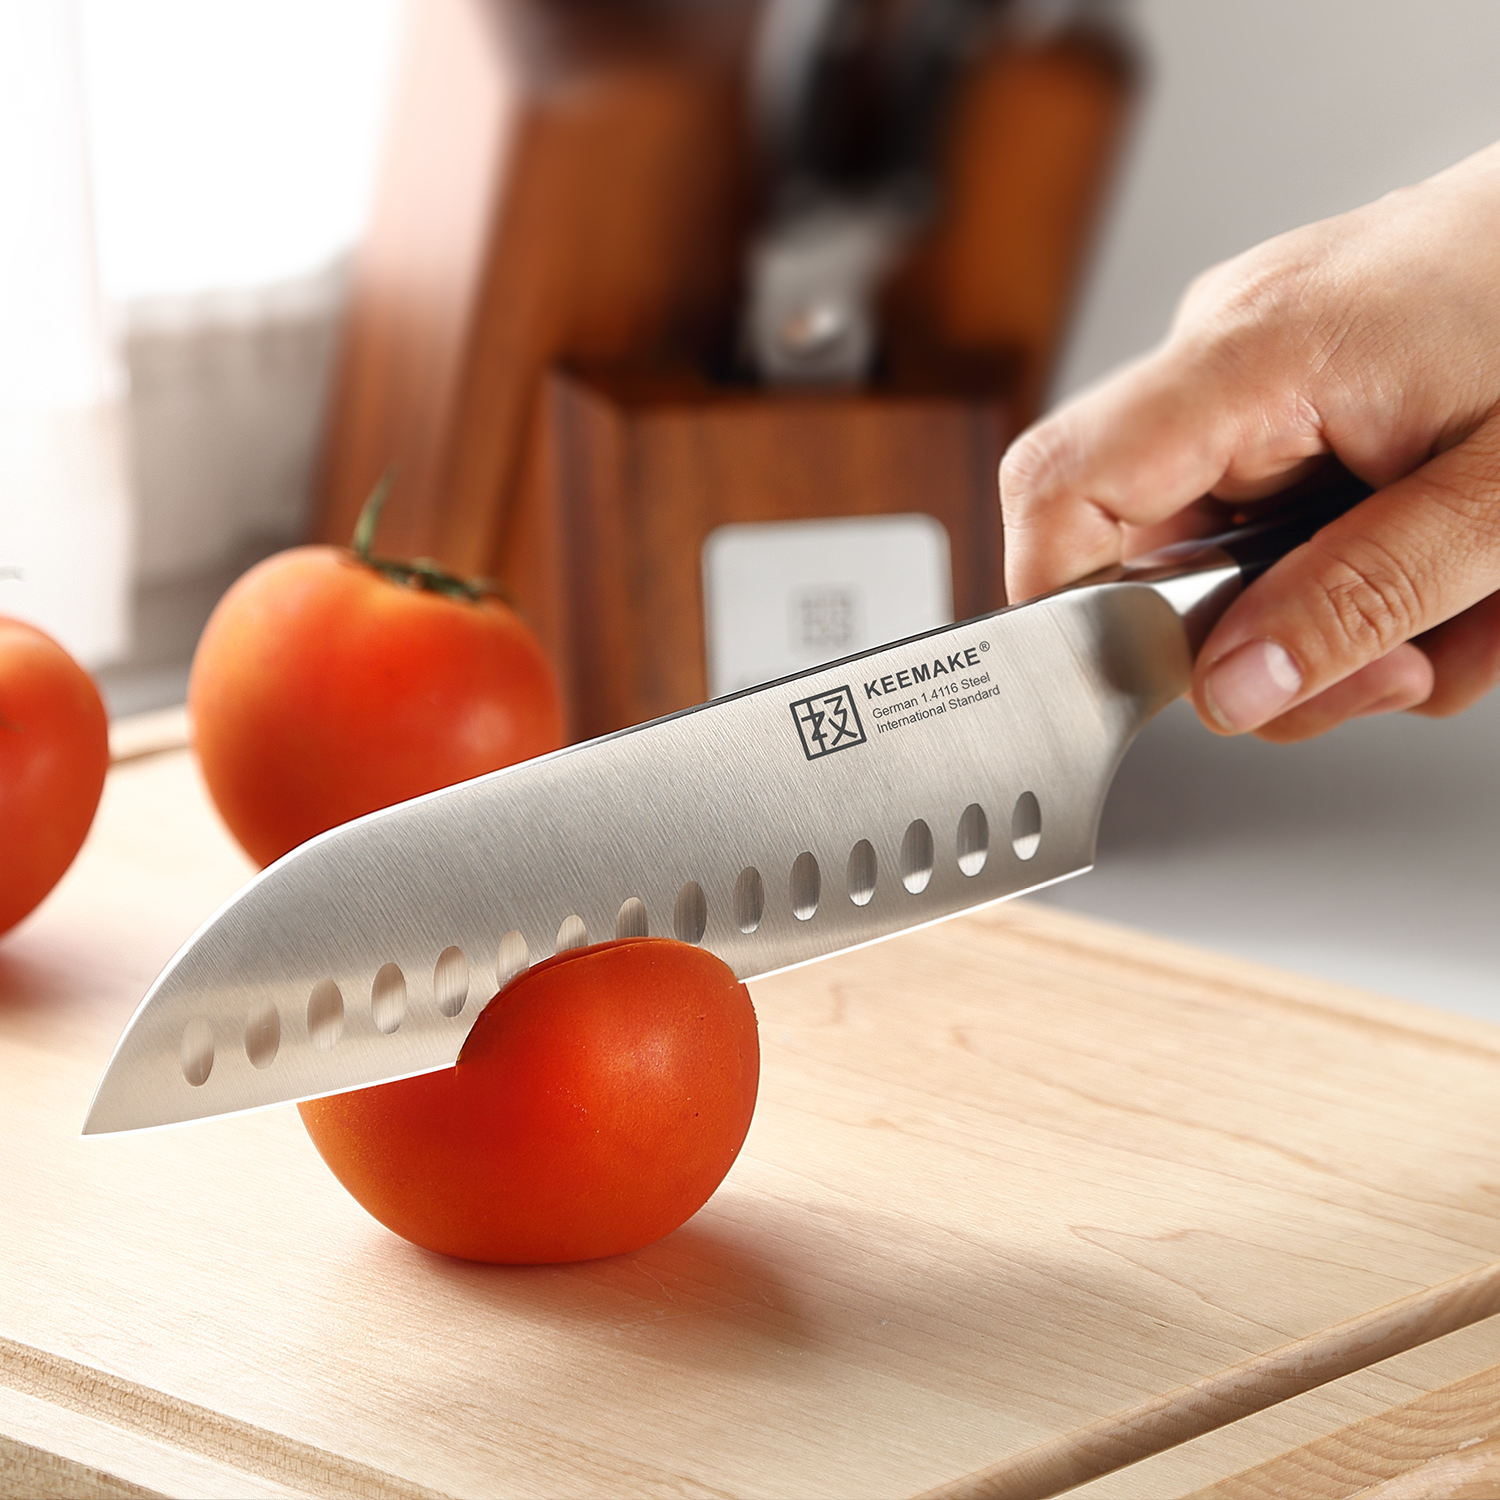 8pcs Kitchen Knife Set with Knife Block